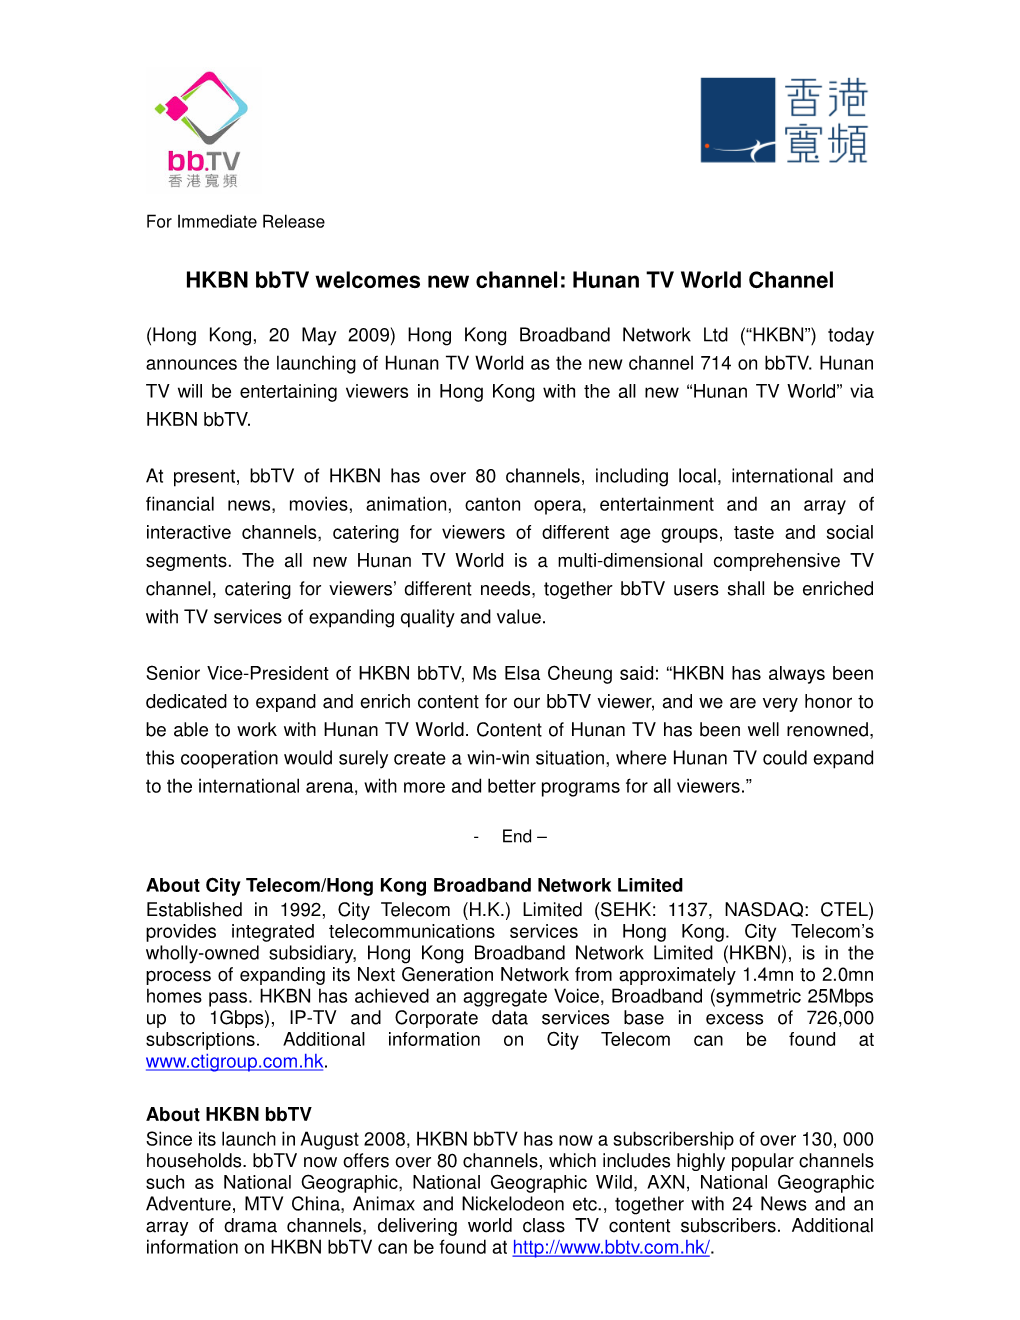 HKBN Bbtv Welcomes New Channel: Hunan TV World Channel